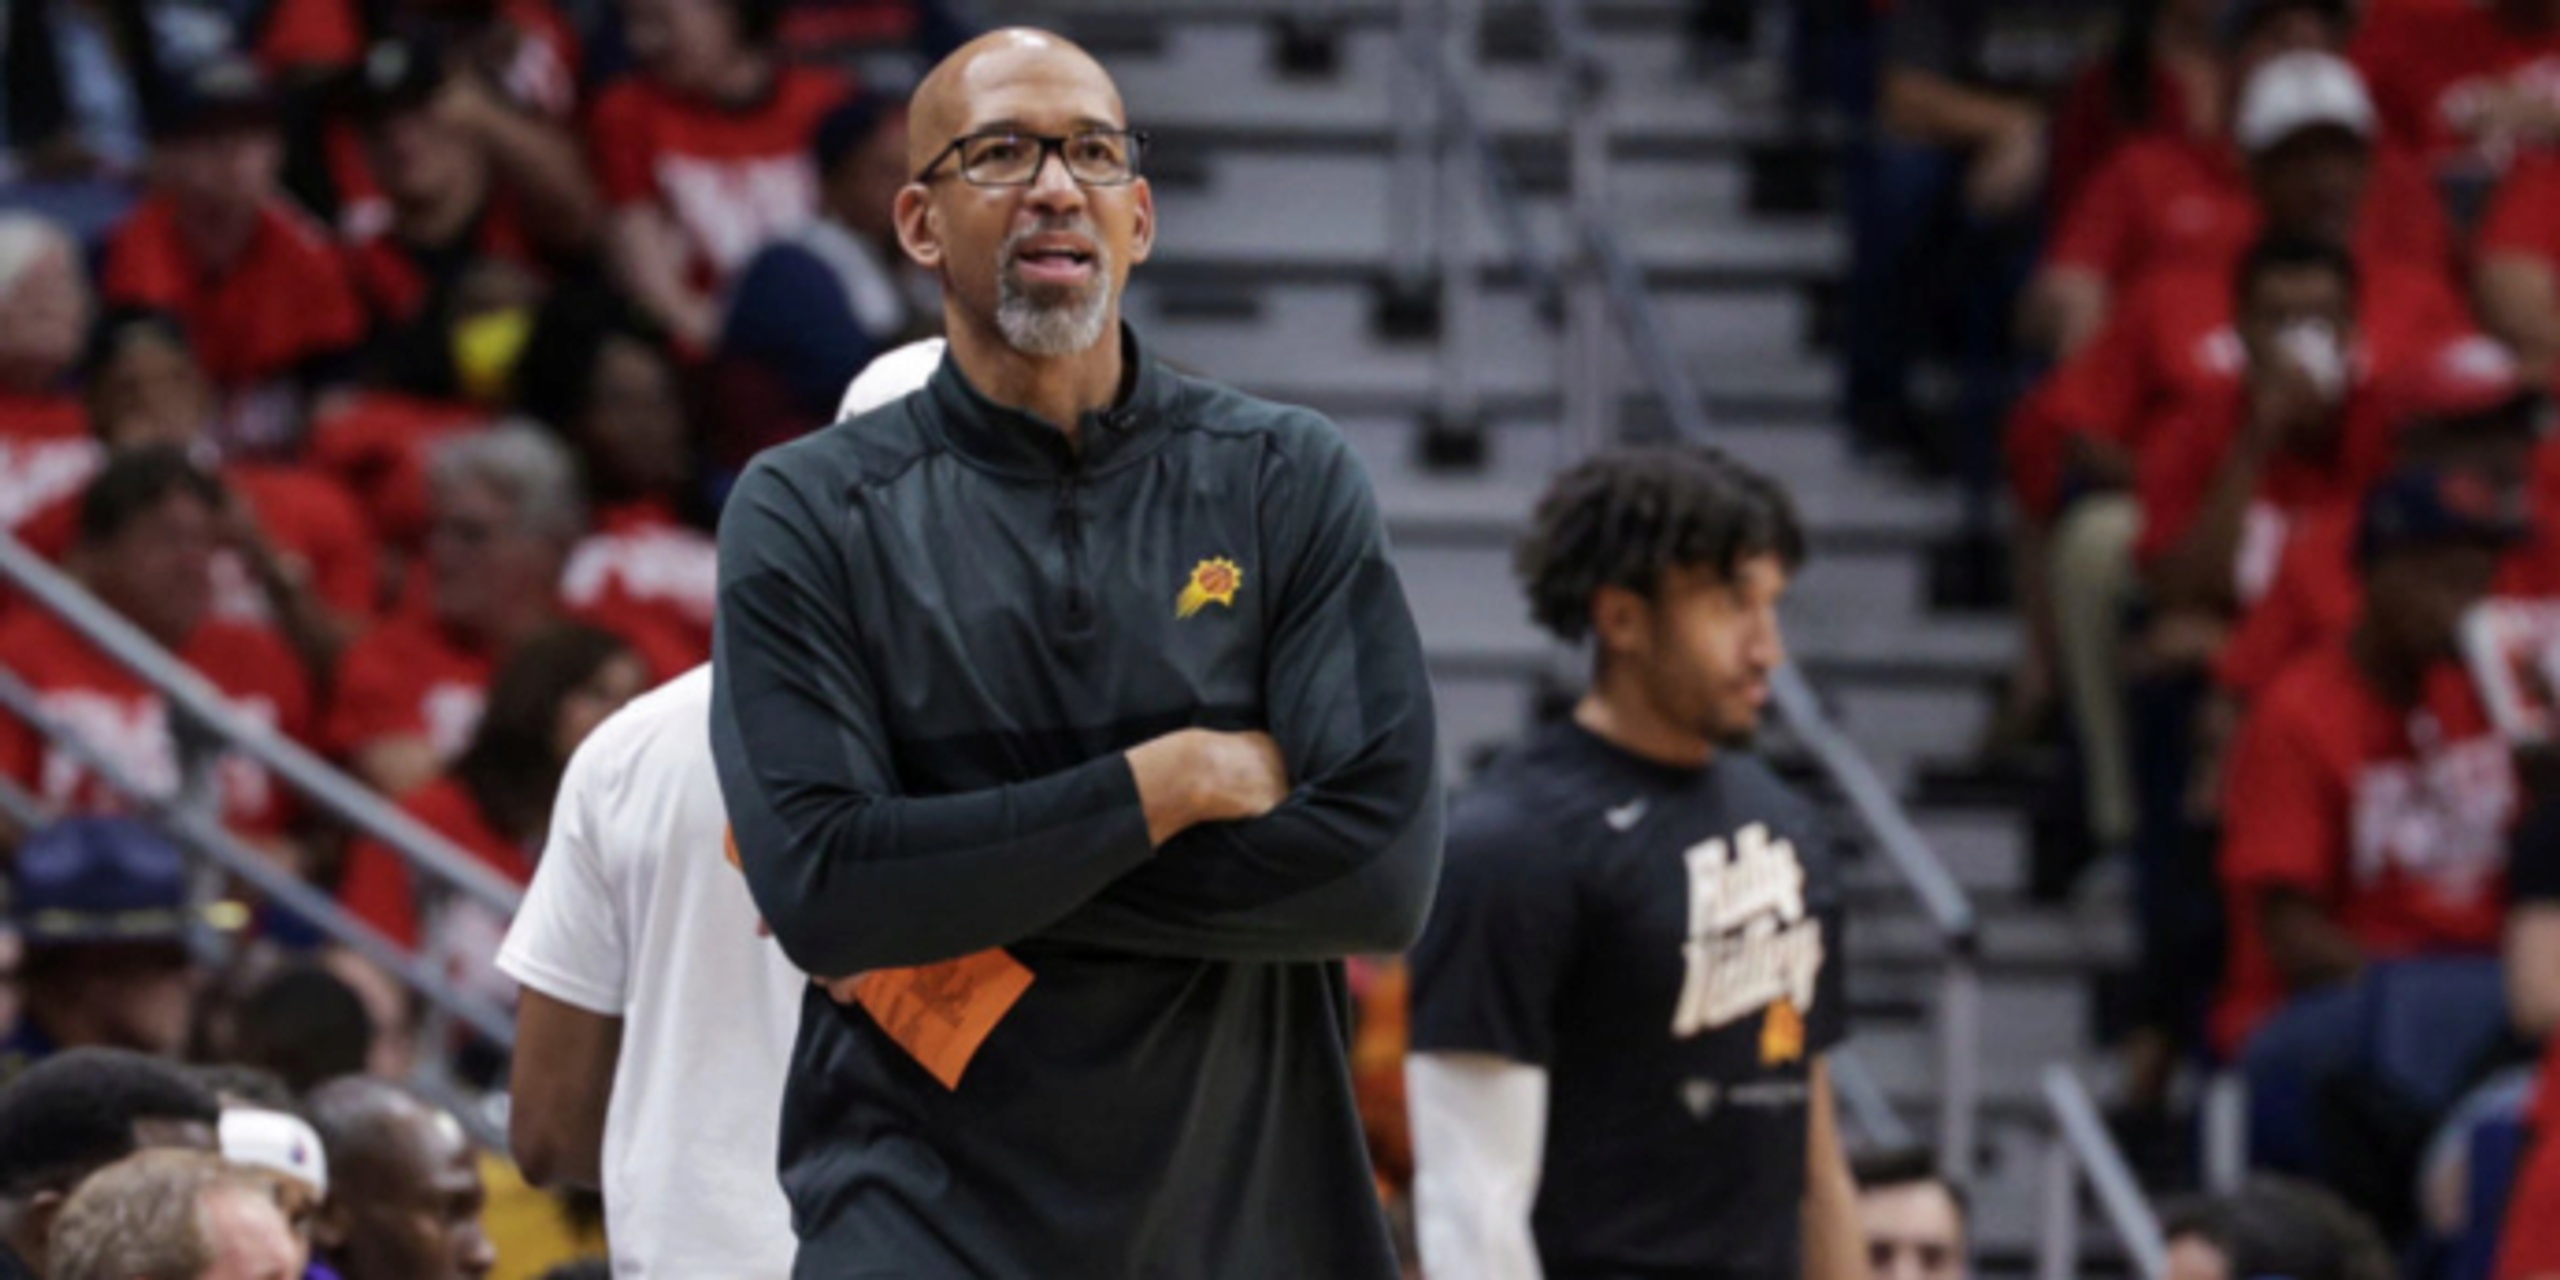 Suns coach Monty Williams fined $15K for criticizing refs